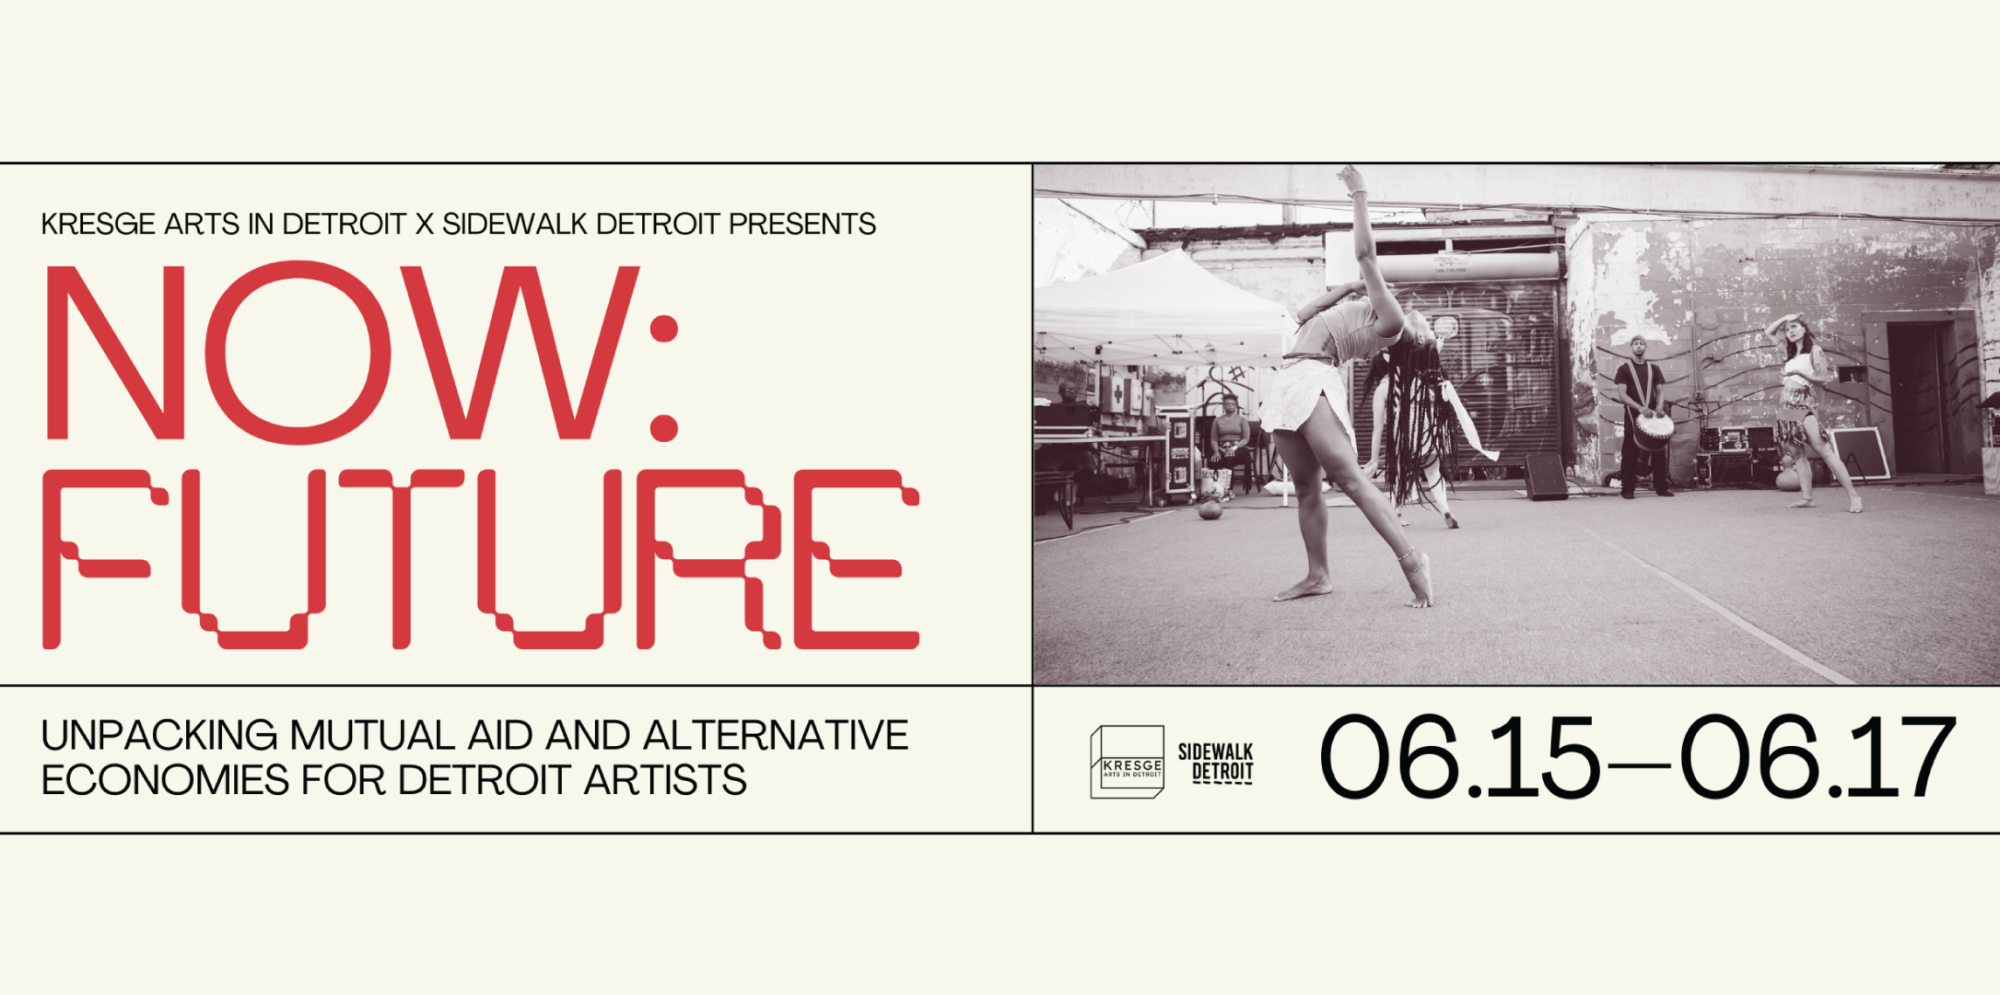 Graphic promoting Sidewalk Detroit's Now:Future series